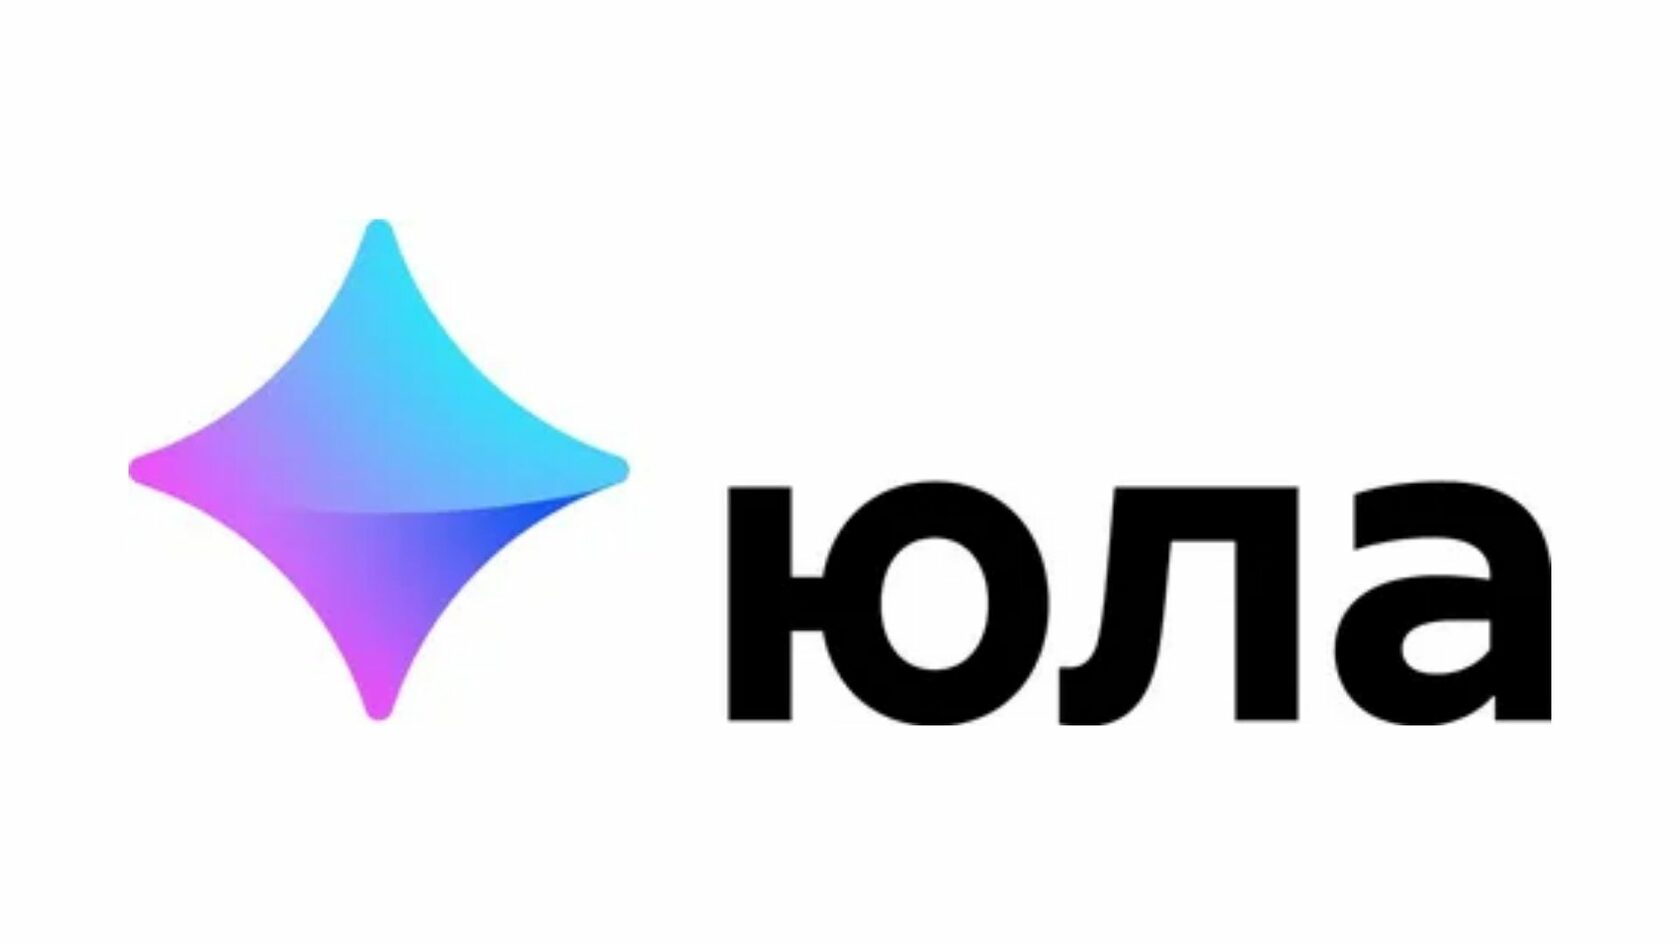 Yula logo